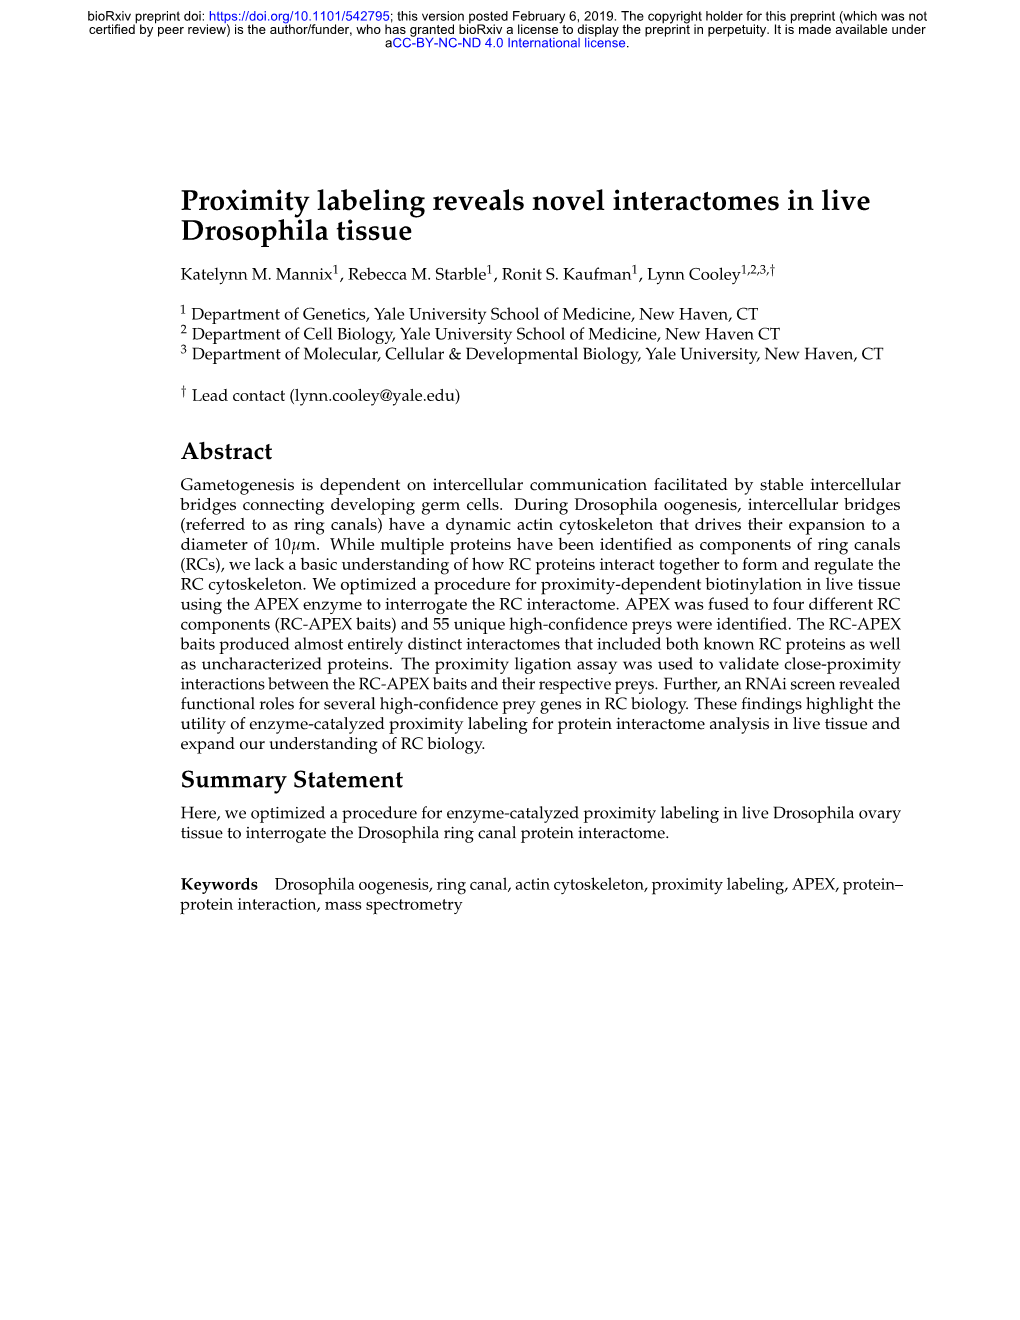 Proximity Labeling Reveals Novel Interactomes in Live Drosophila Tissue